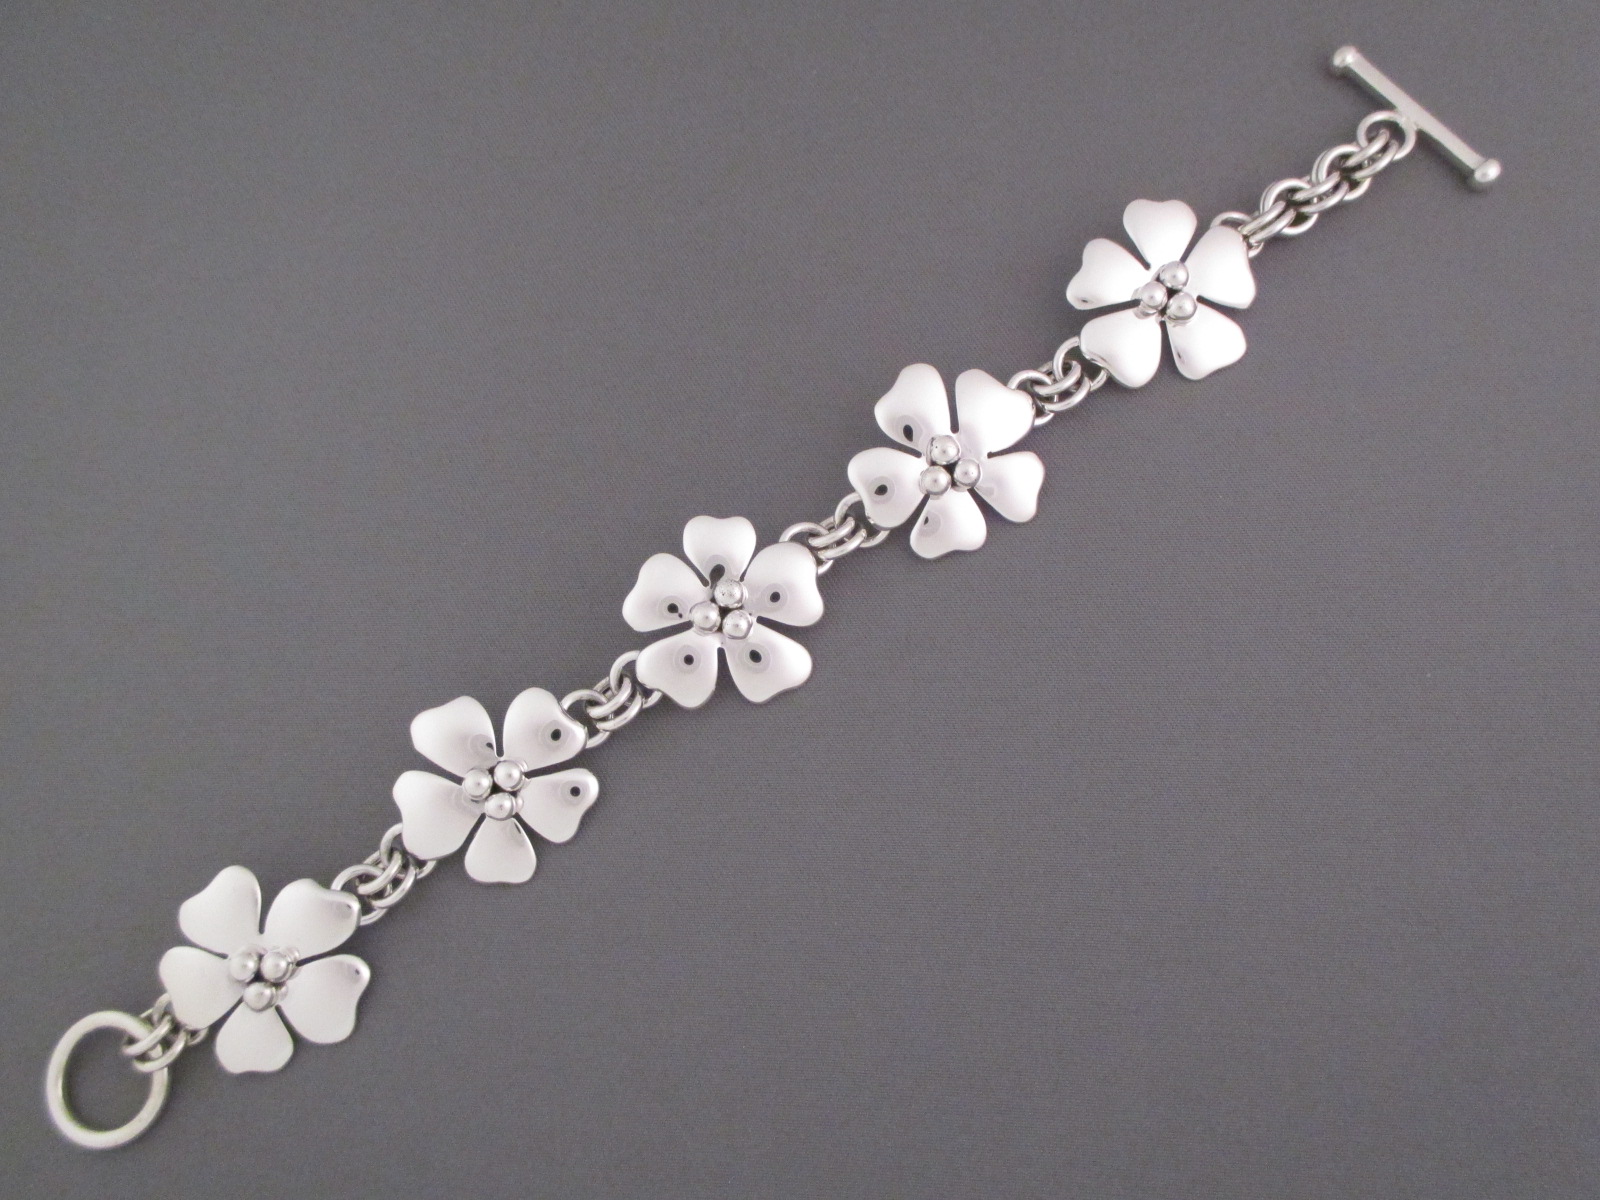 Navajo Jewelry - Sterling Silver 'Flower' Link Bracelet by Native American jewelry artist, Artie Yellowhorse $295-